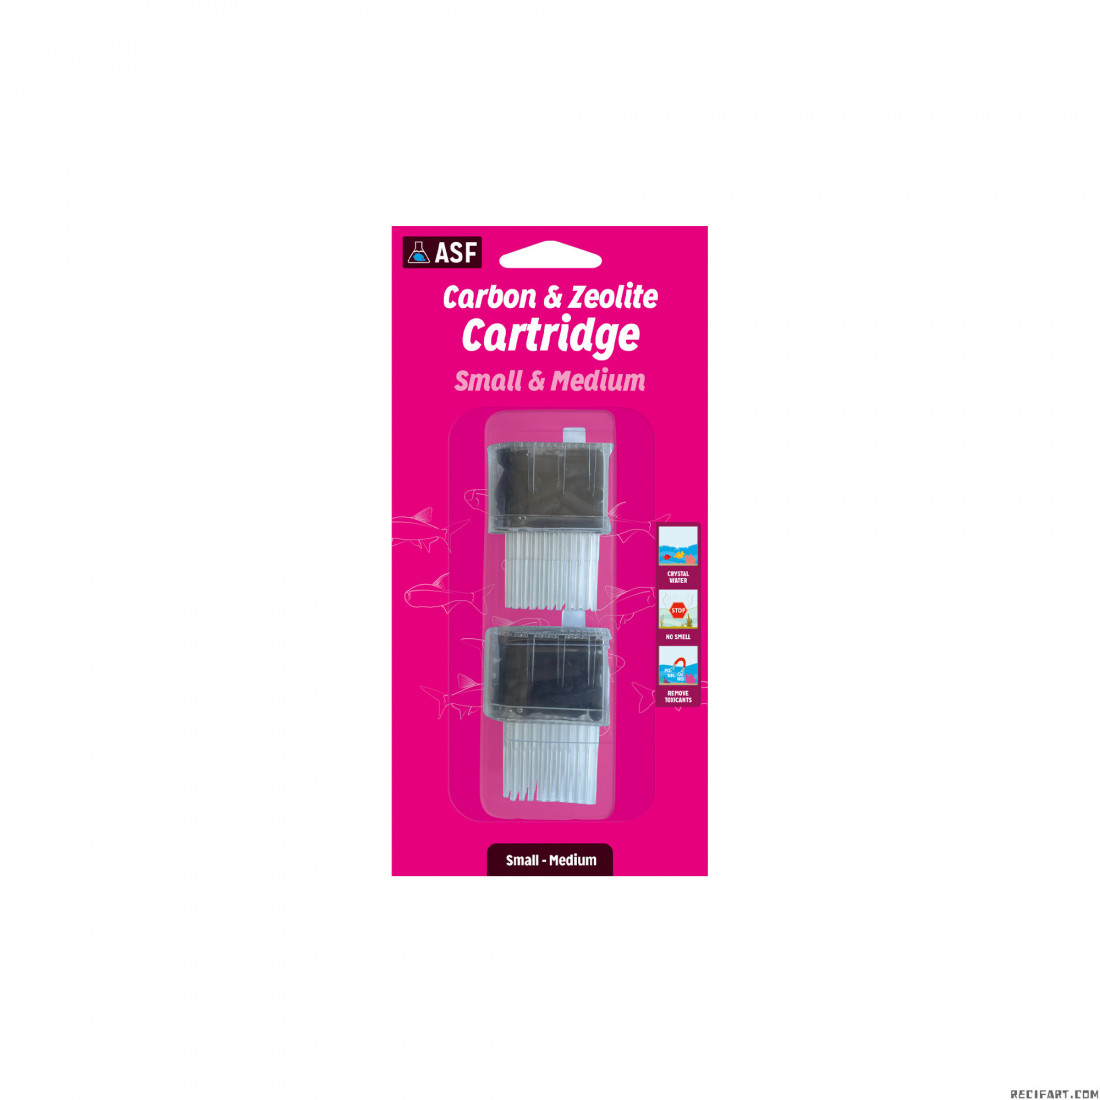 Carbon & zeolite cartridge for NewJet Filter Small & Medium